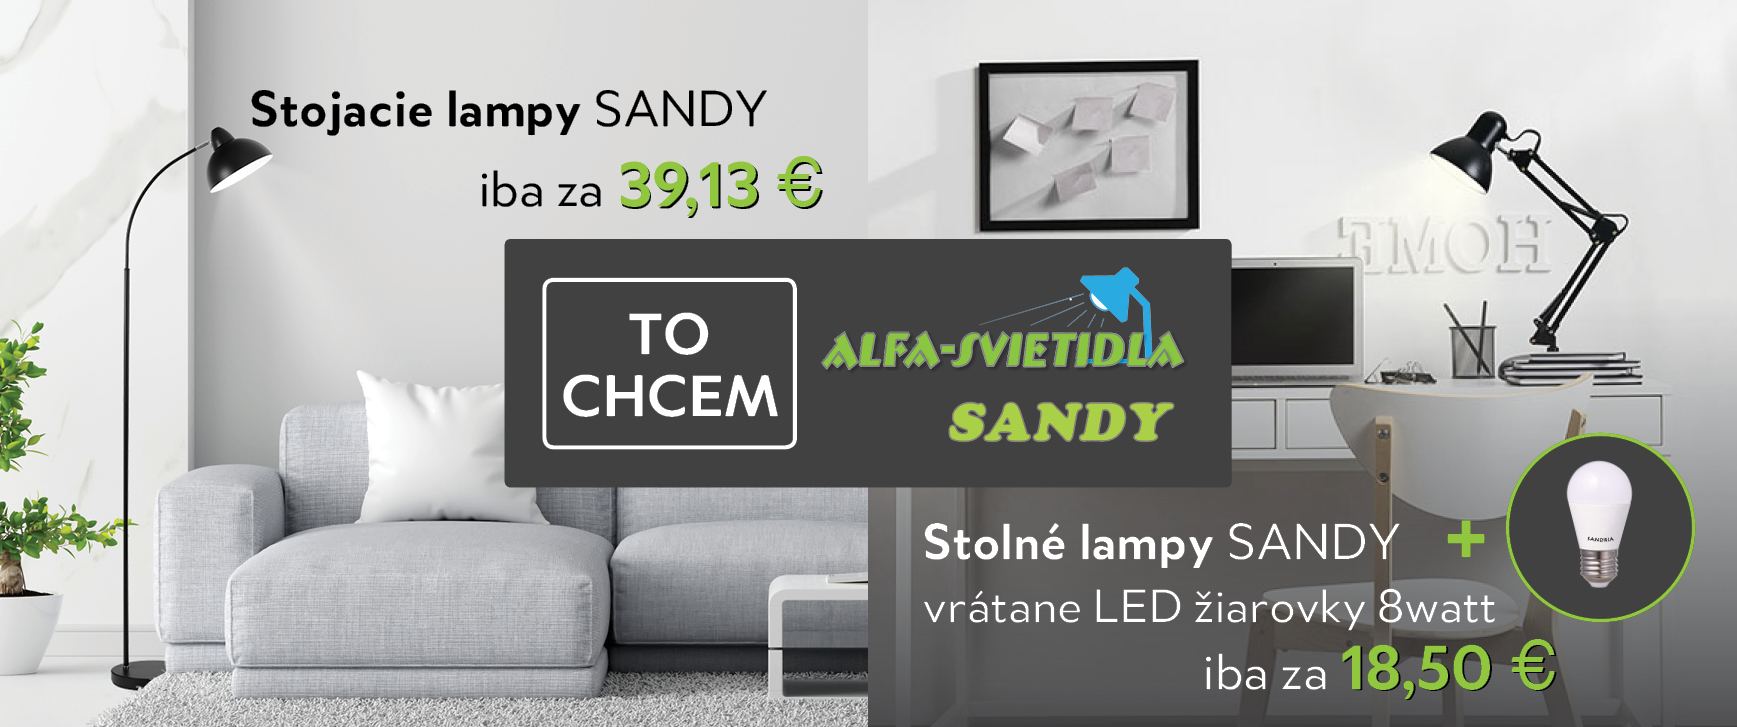 slide /fotky45518/slider/Lampicka-zarovka-lampa-Sandy_SK_868x363.jpg